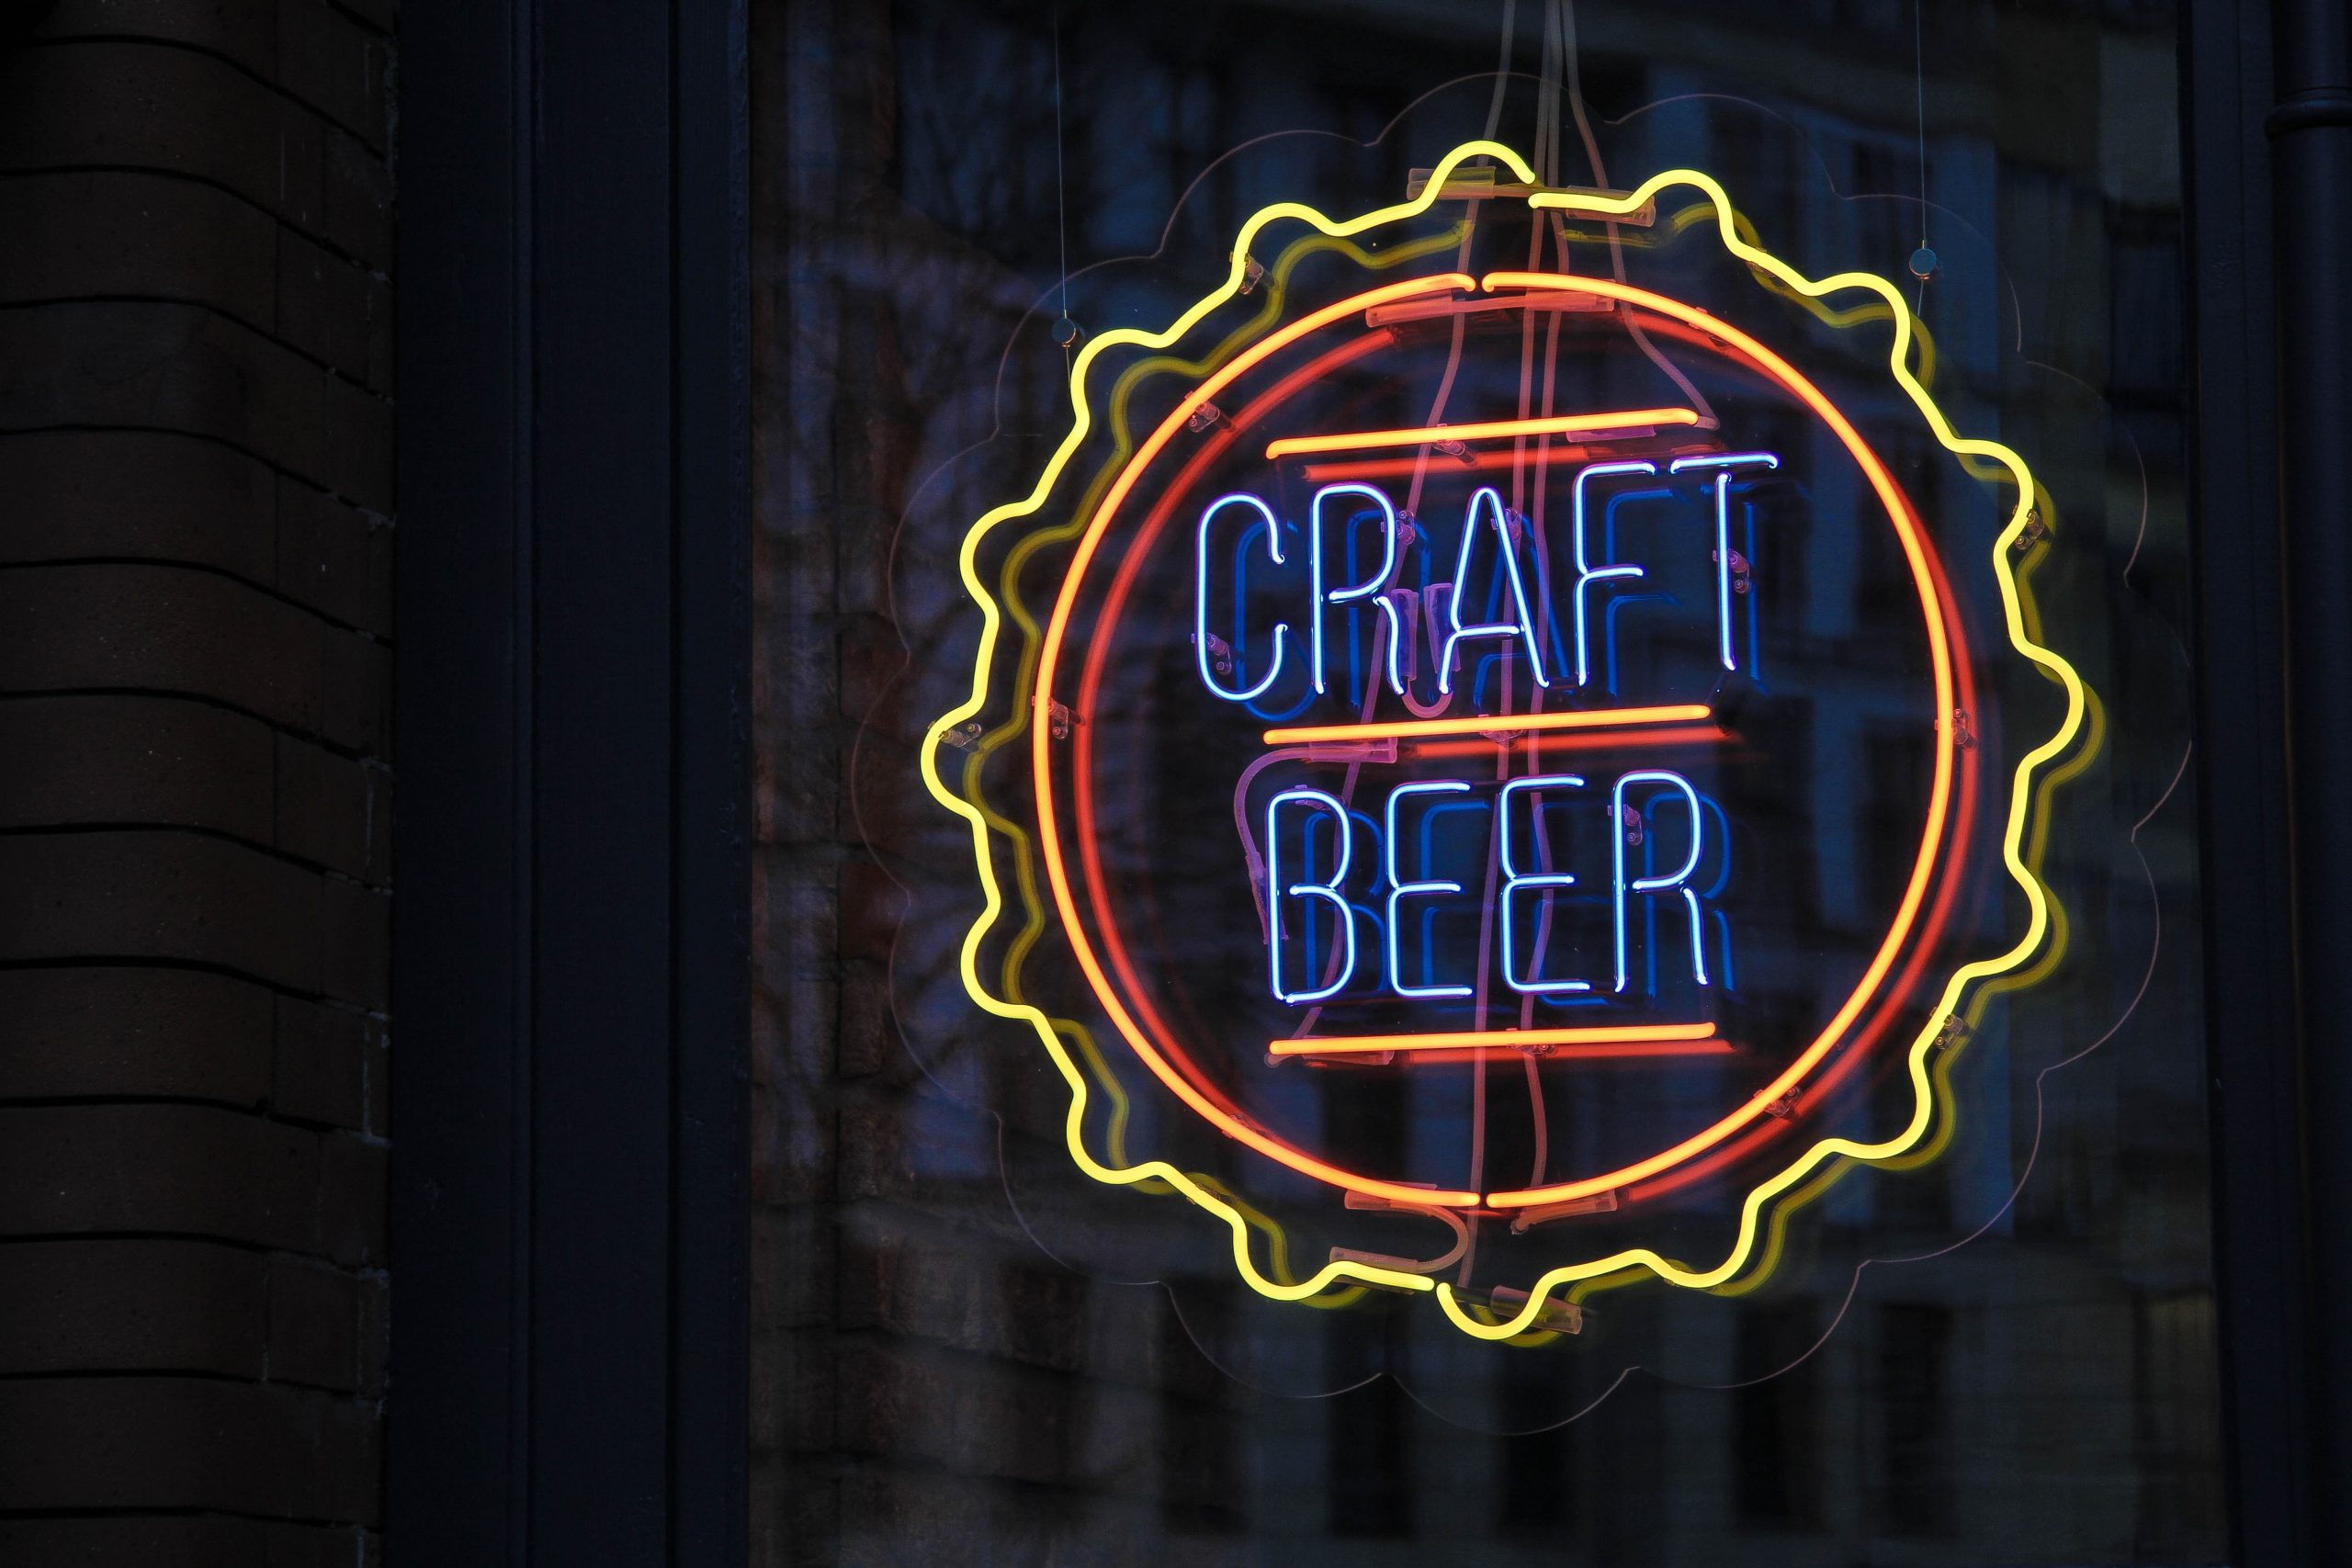 craft beer neon sign inside brewery